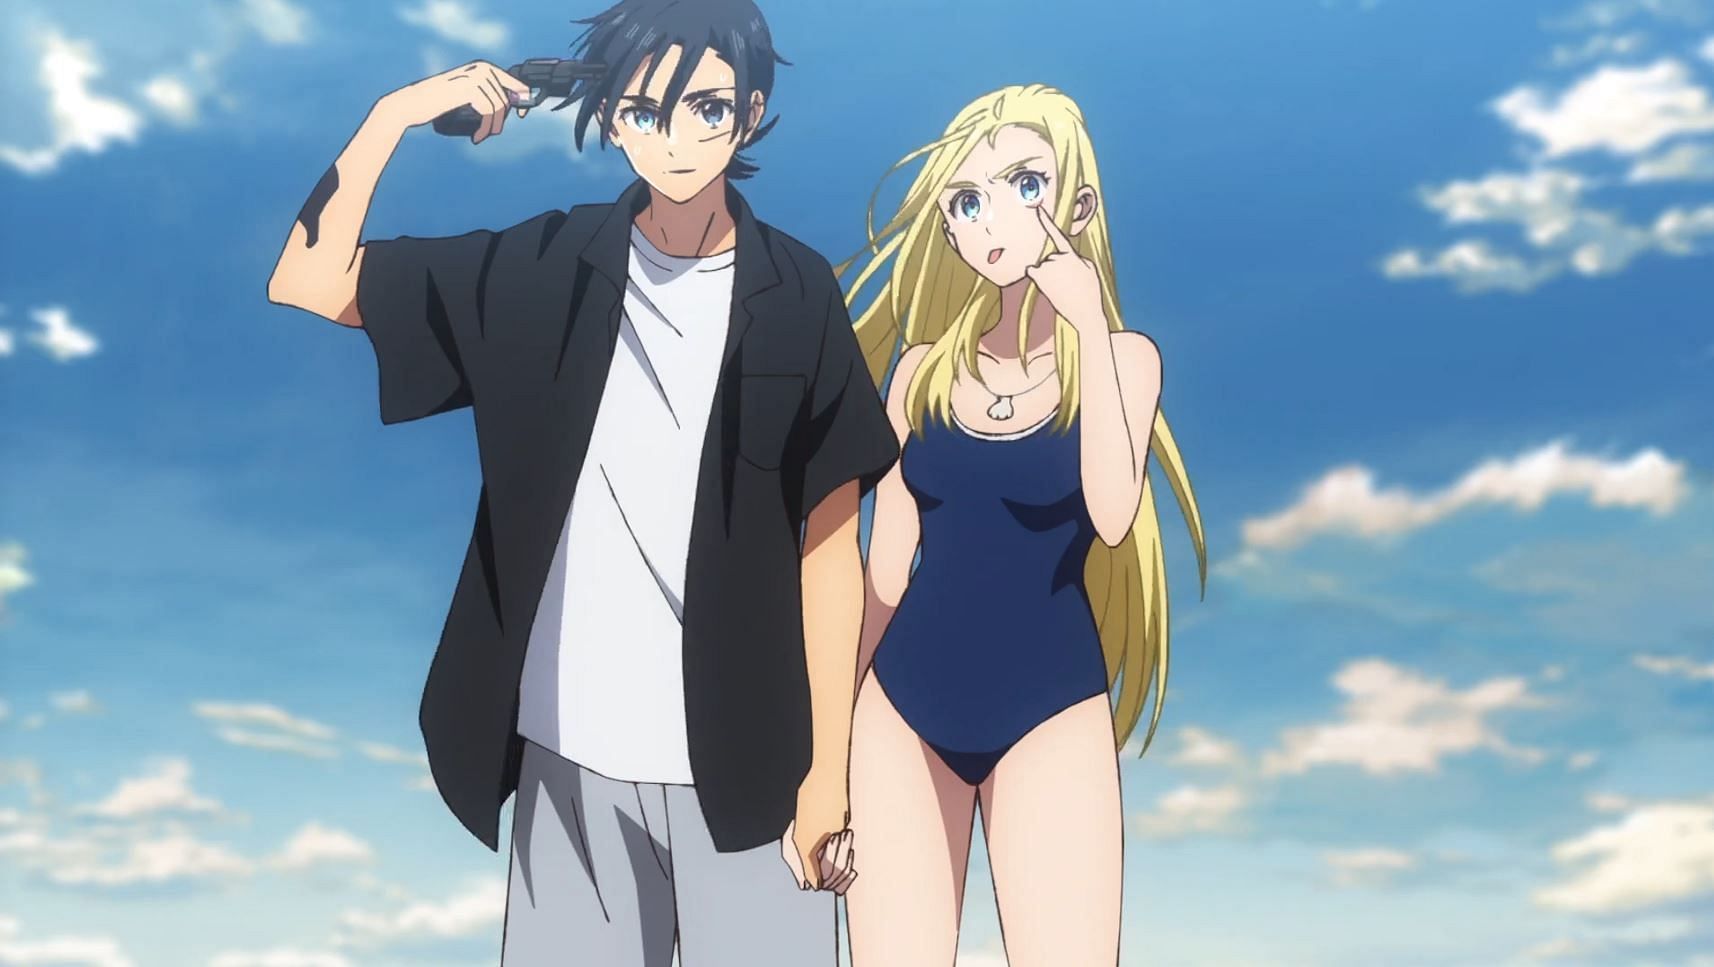 Summertime Render Episódio 22 - Animes Online